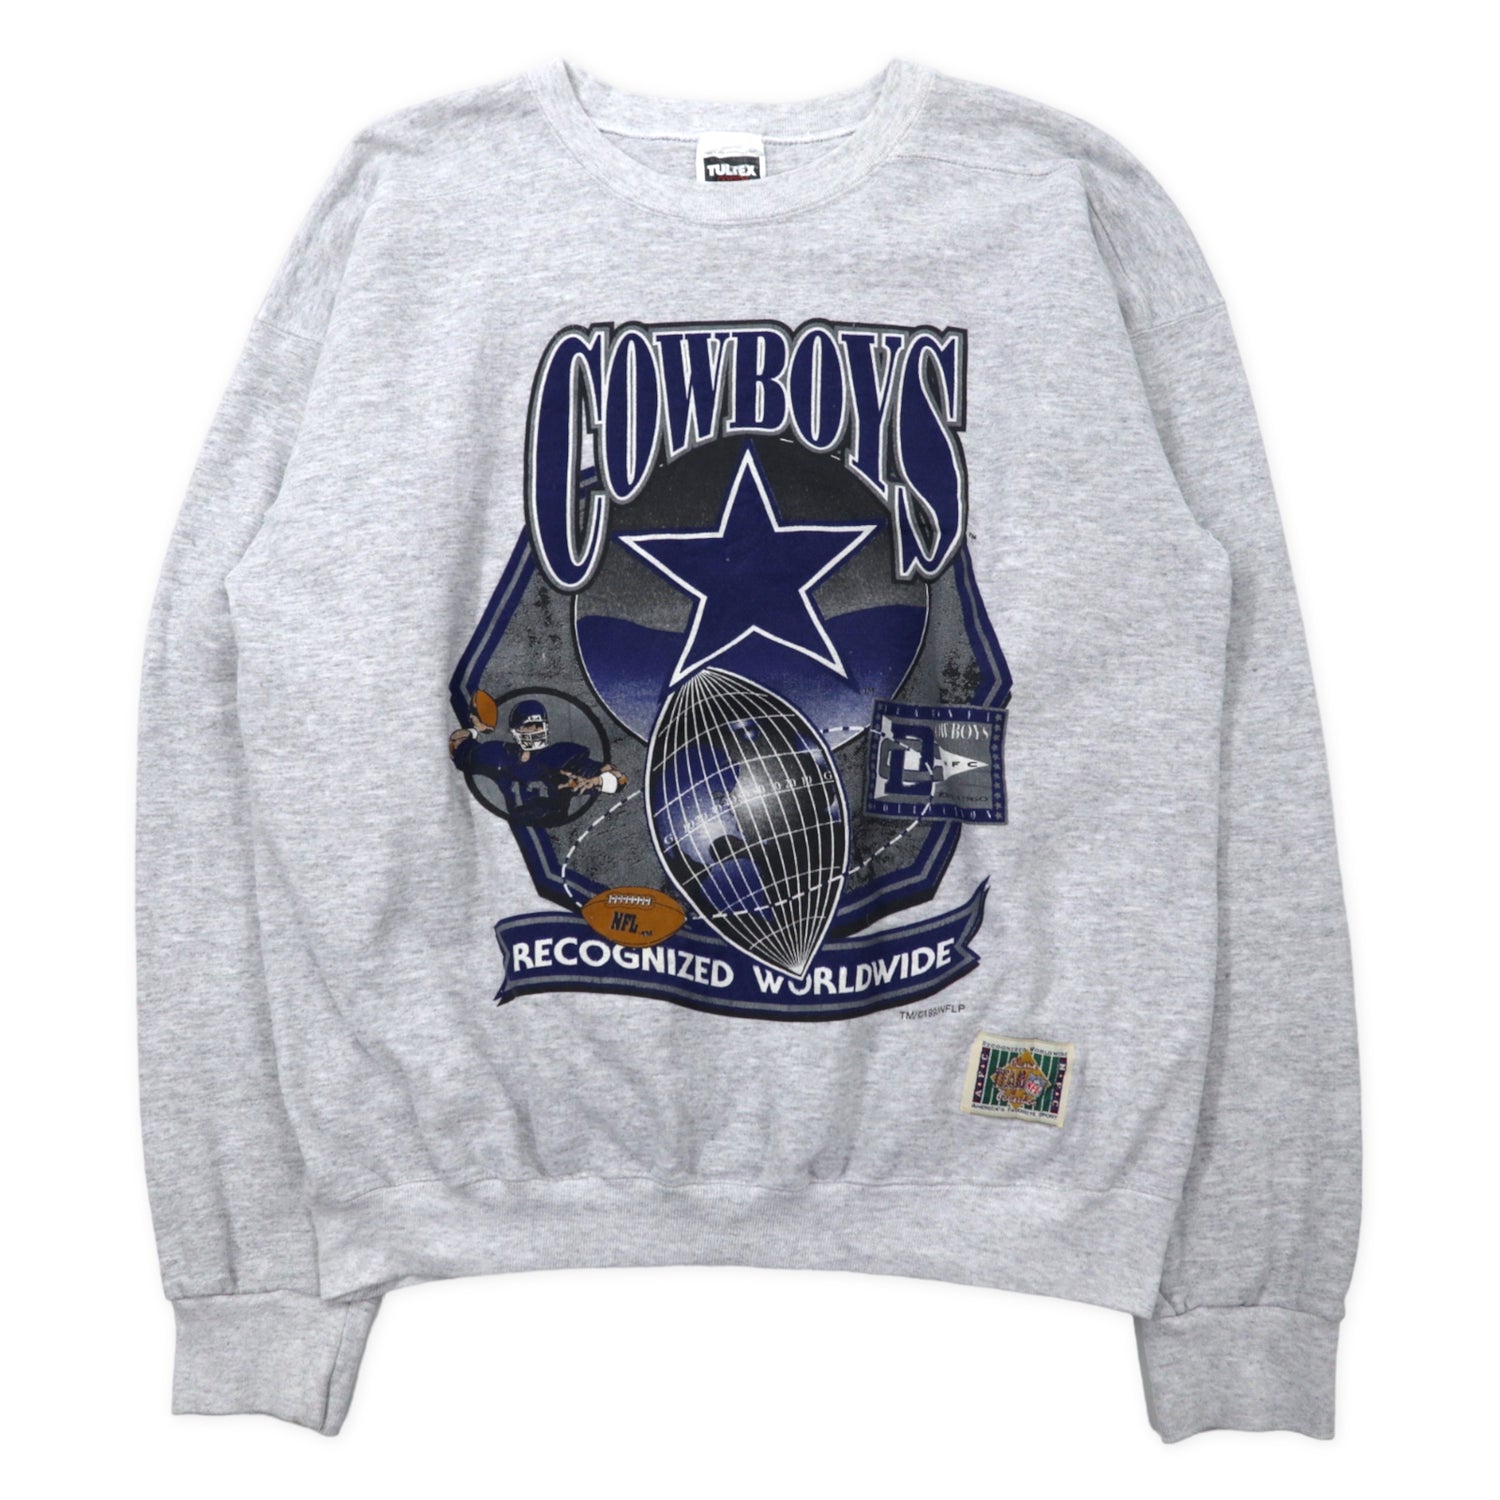 TULTEX USA MADE 90s NFL Print Sweatshirt M Gray Cotton Dallas Cowboys